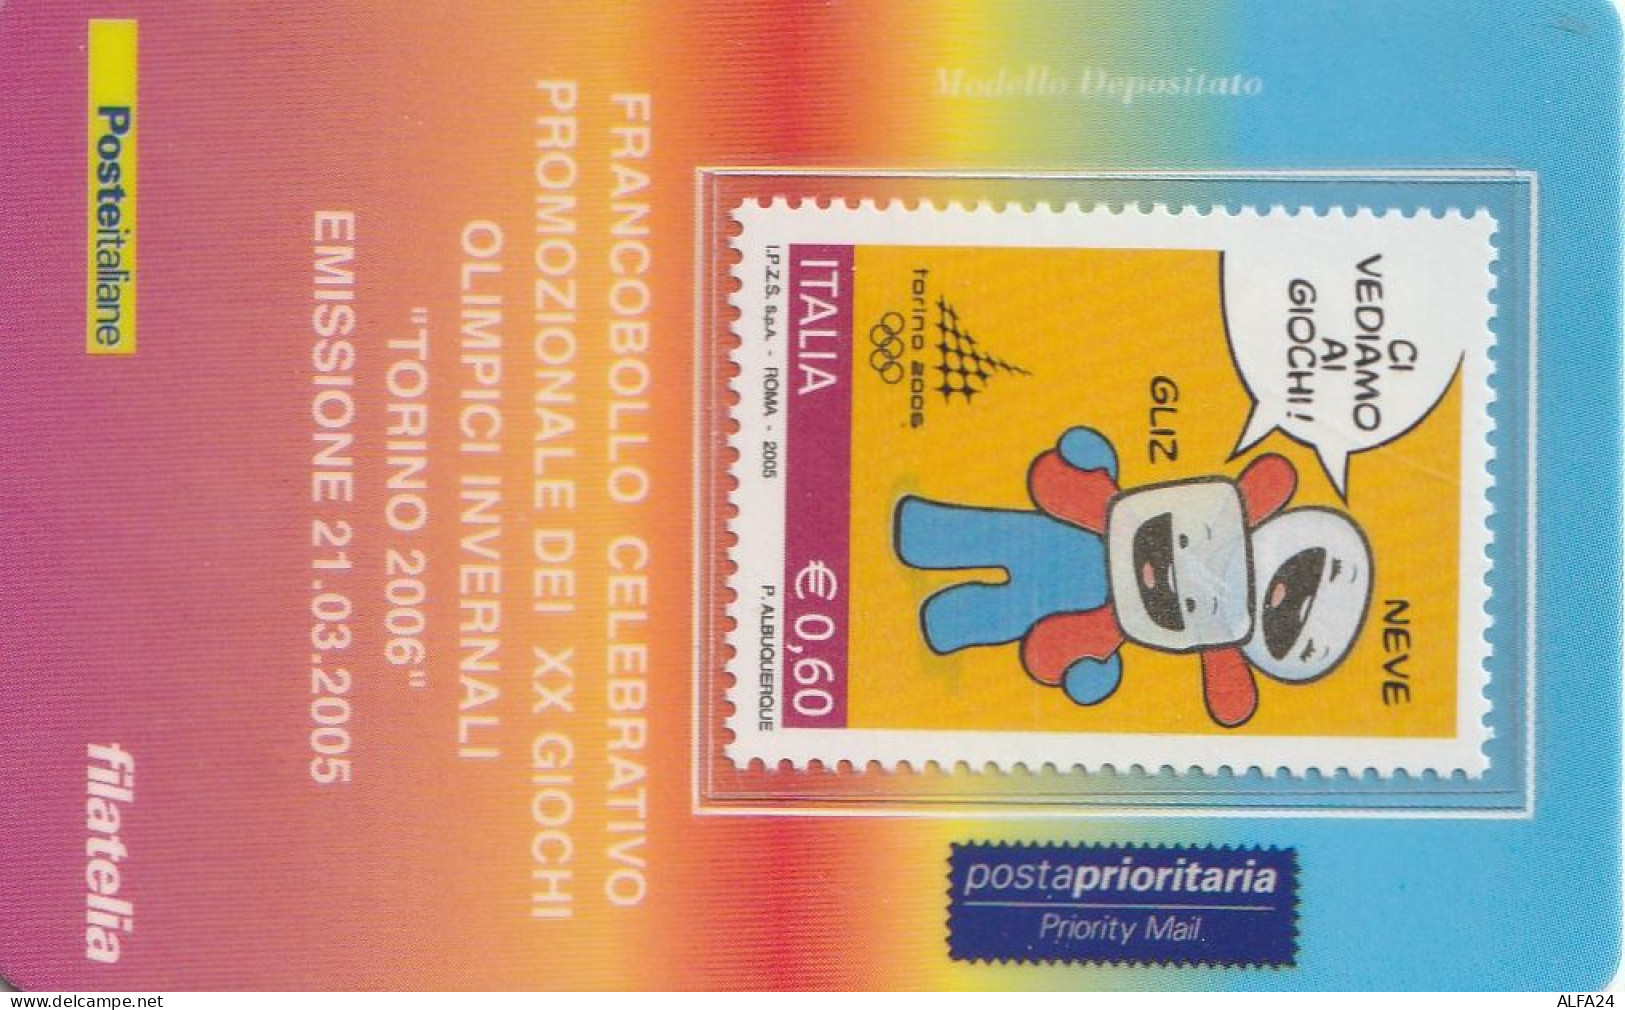 TESSERA FILATELICA VALORE 0,6 EURO TORINO 2006 (TF1053 - Cartes Philatéliques